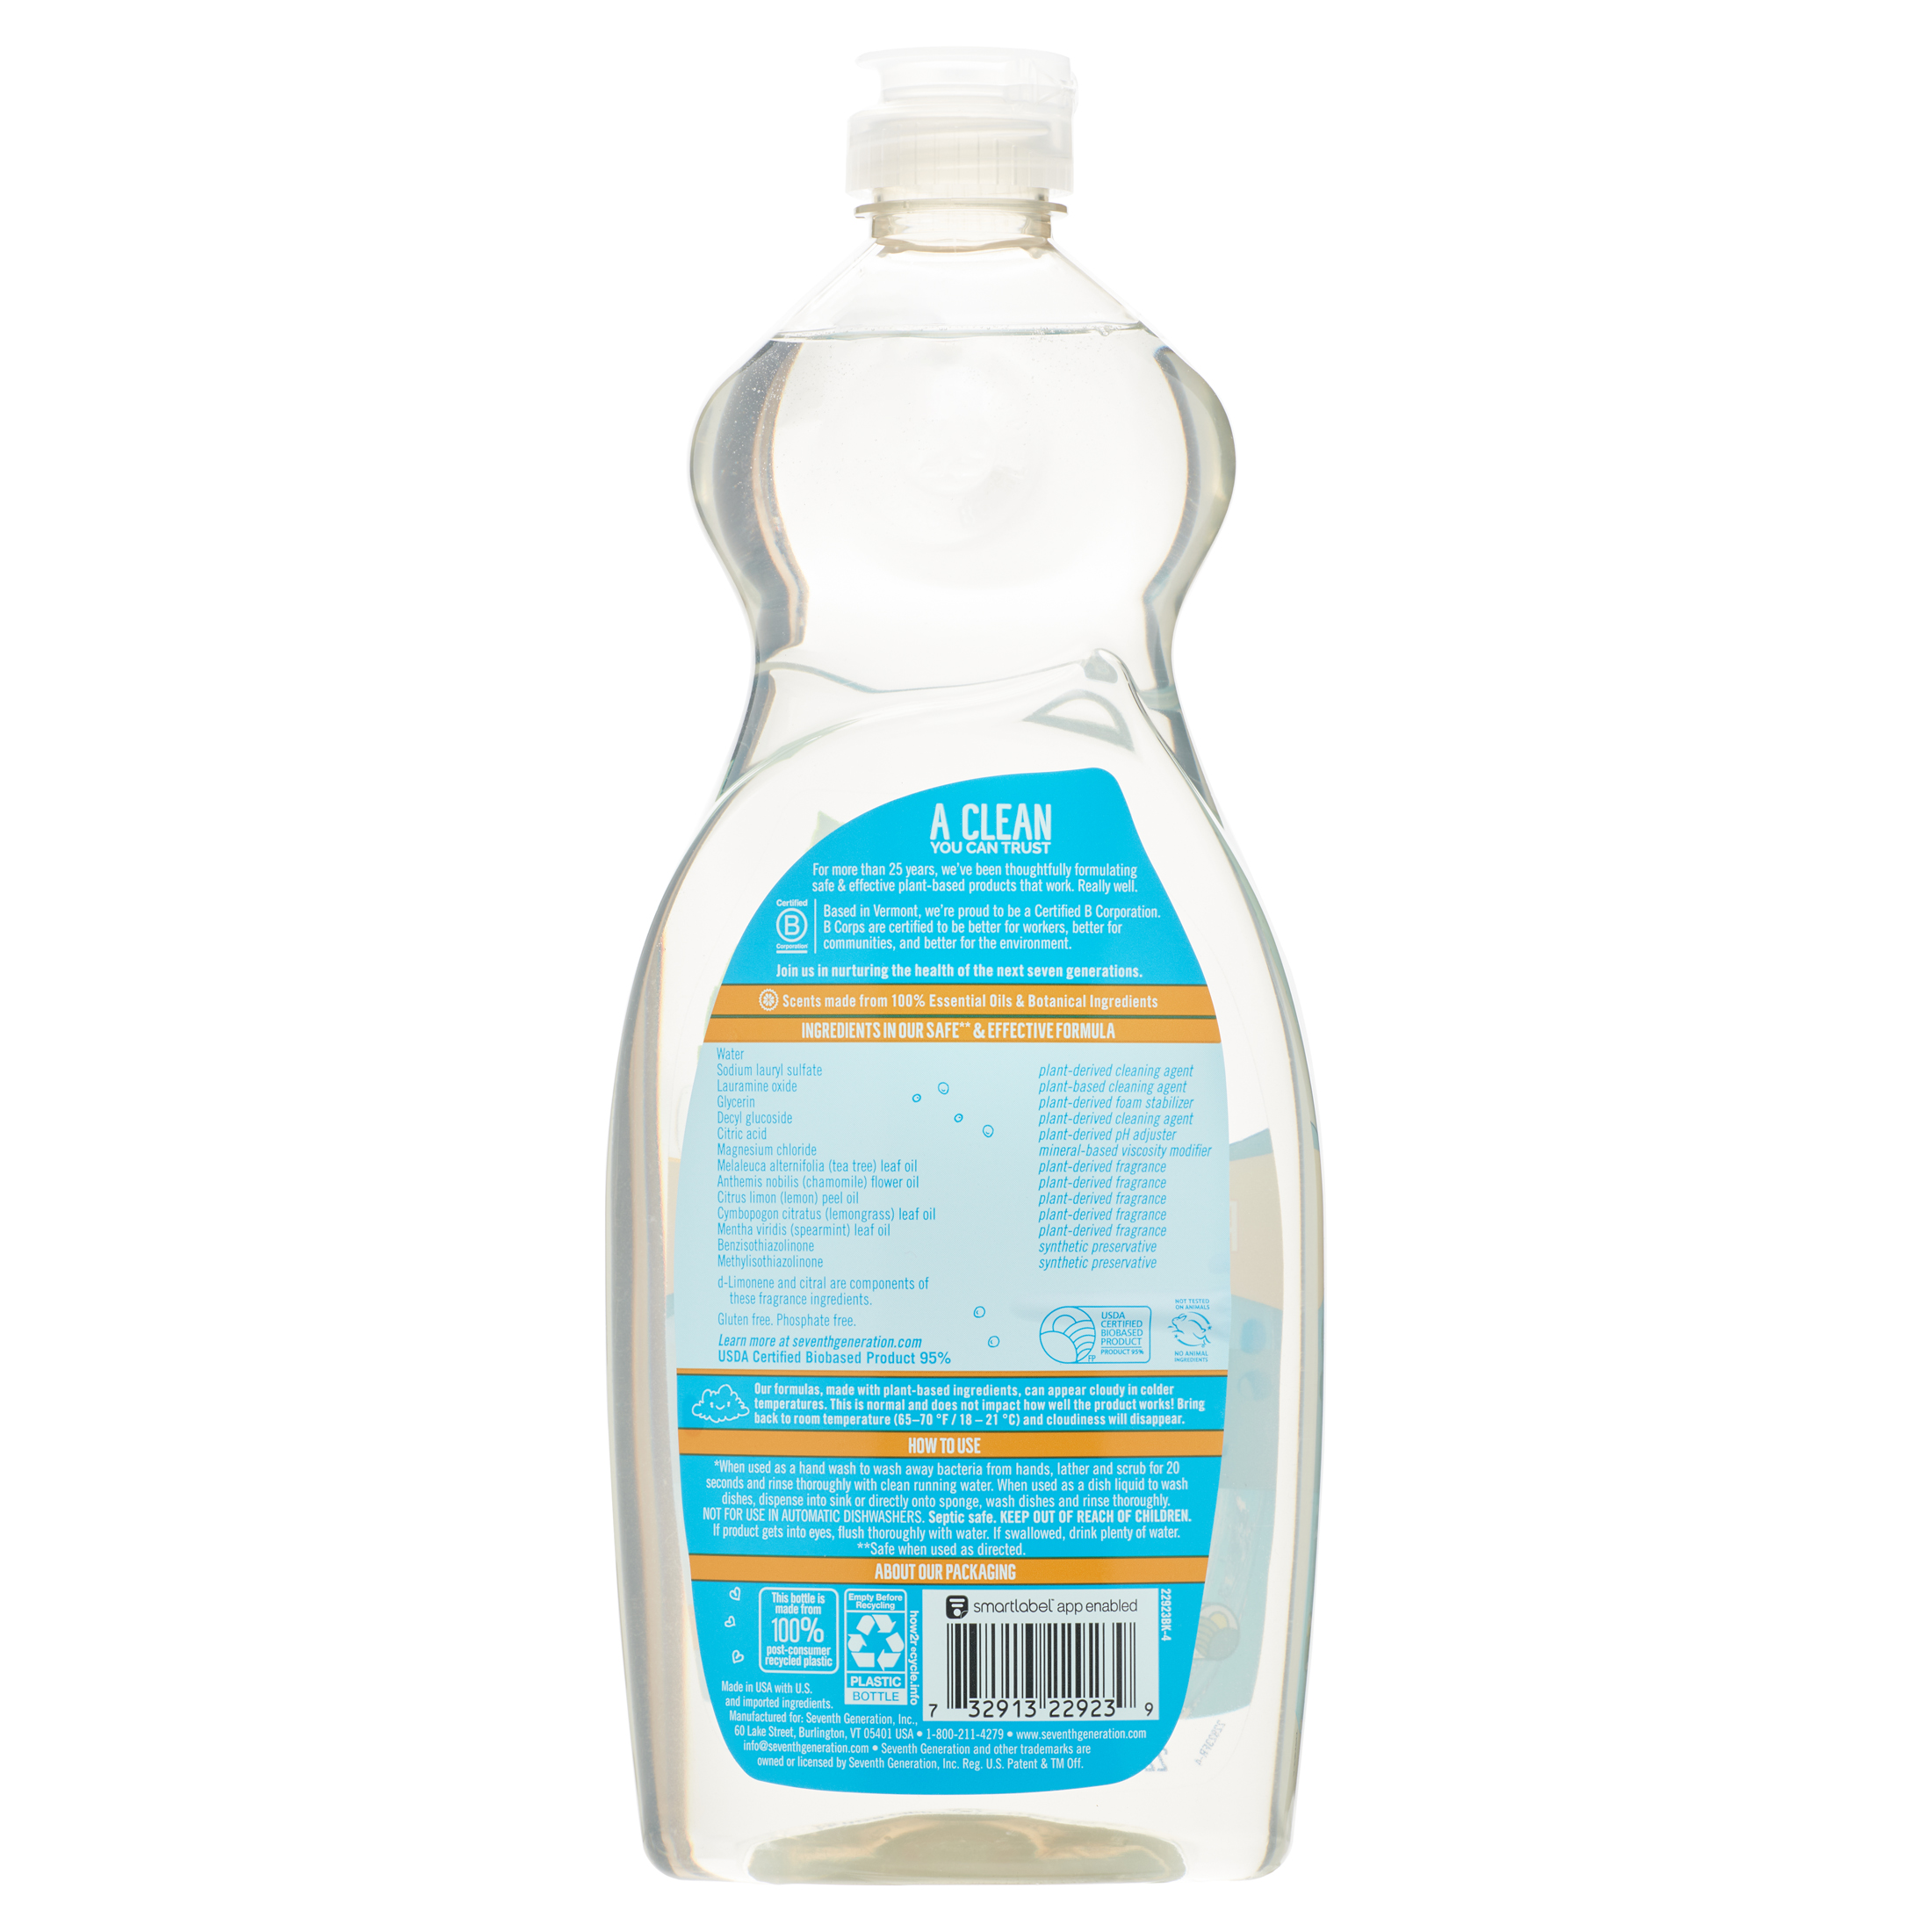 Seventh Generation Purely Clean Liquid Dish Soap, Fresh Lemon & Tea Tree scent, 22 oz - image 5 of 9